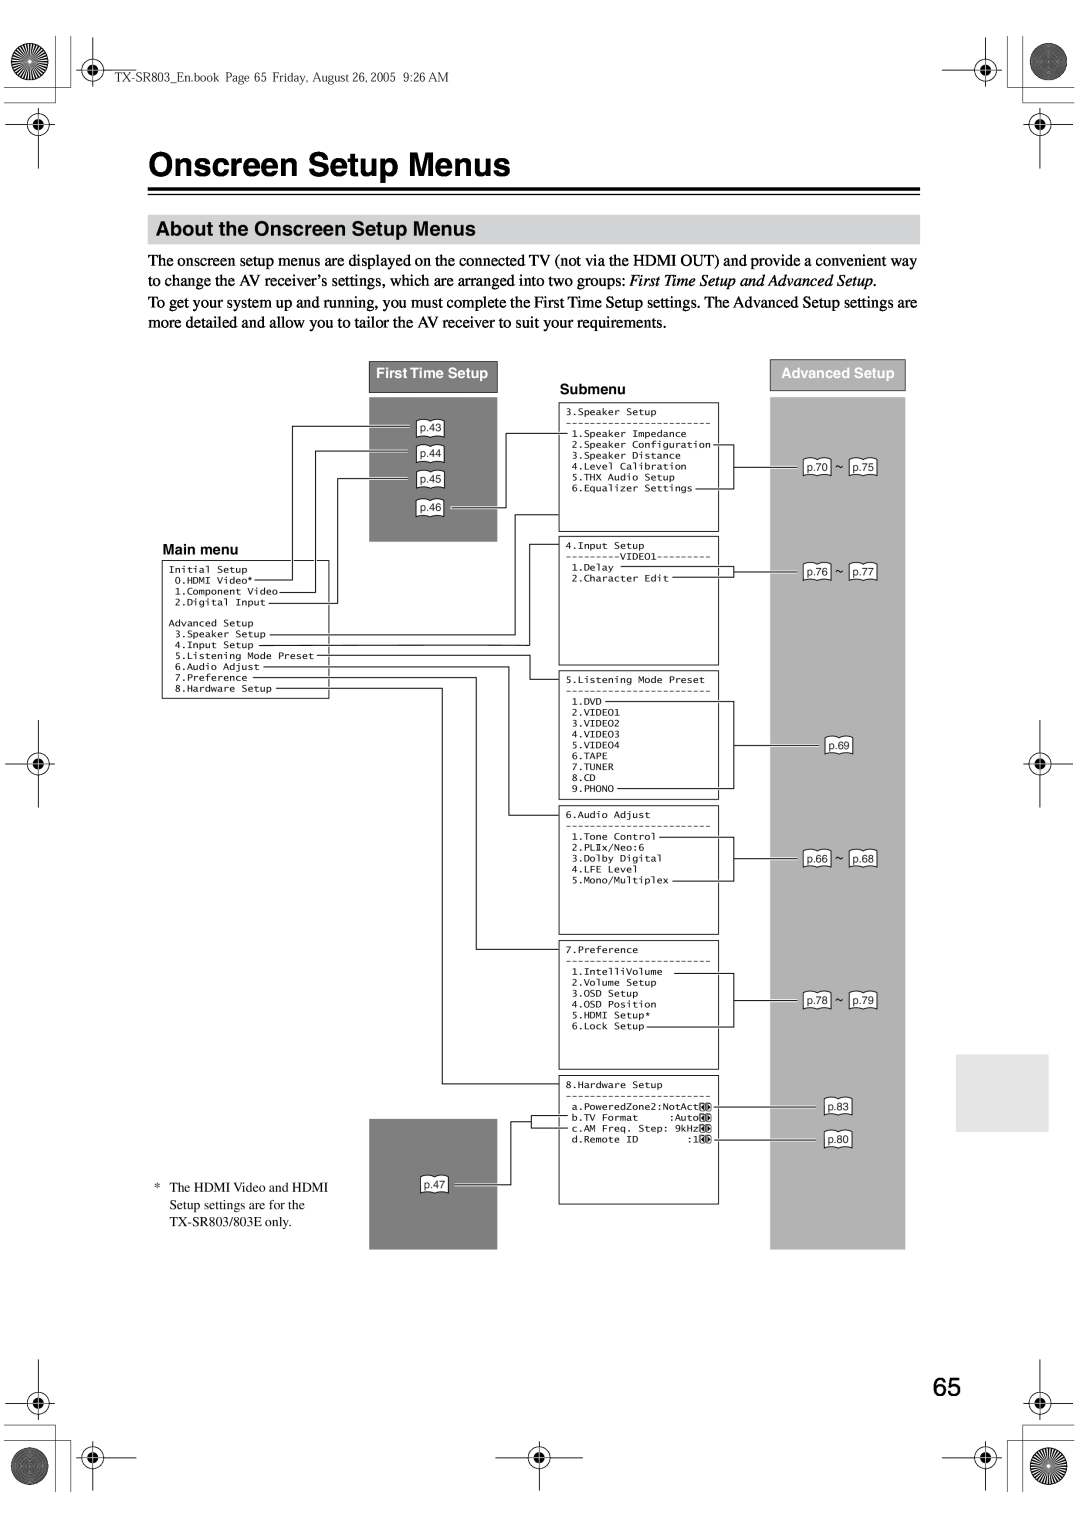 Onkyo TX-SR8370, TX-SR803, TX-SR703E, TX-SR 803E instruction manual About the Onscreen Setup Menus 